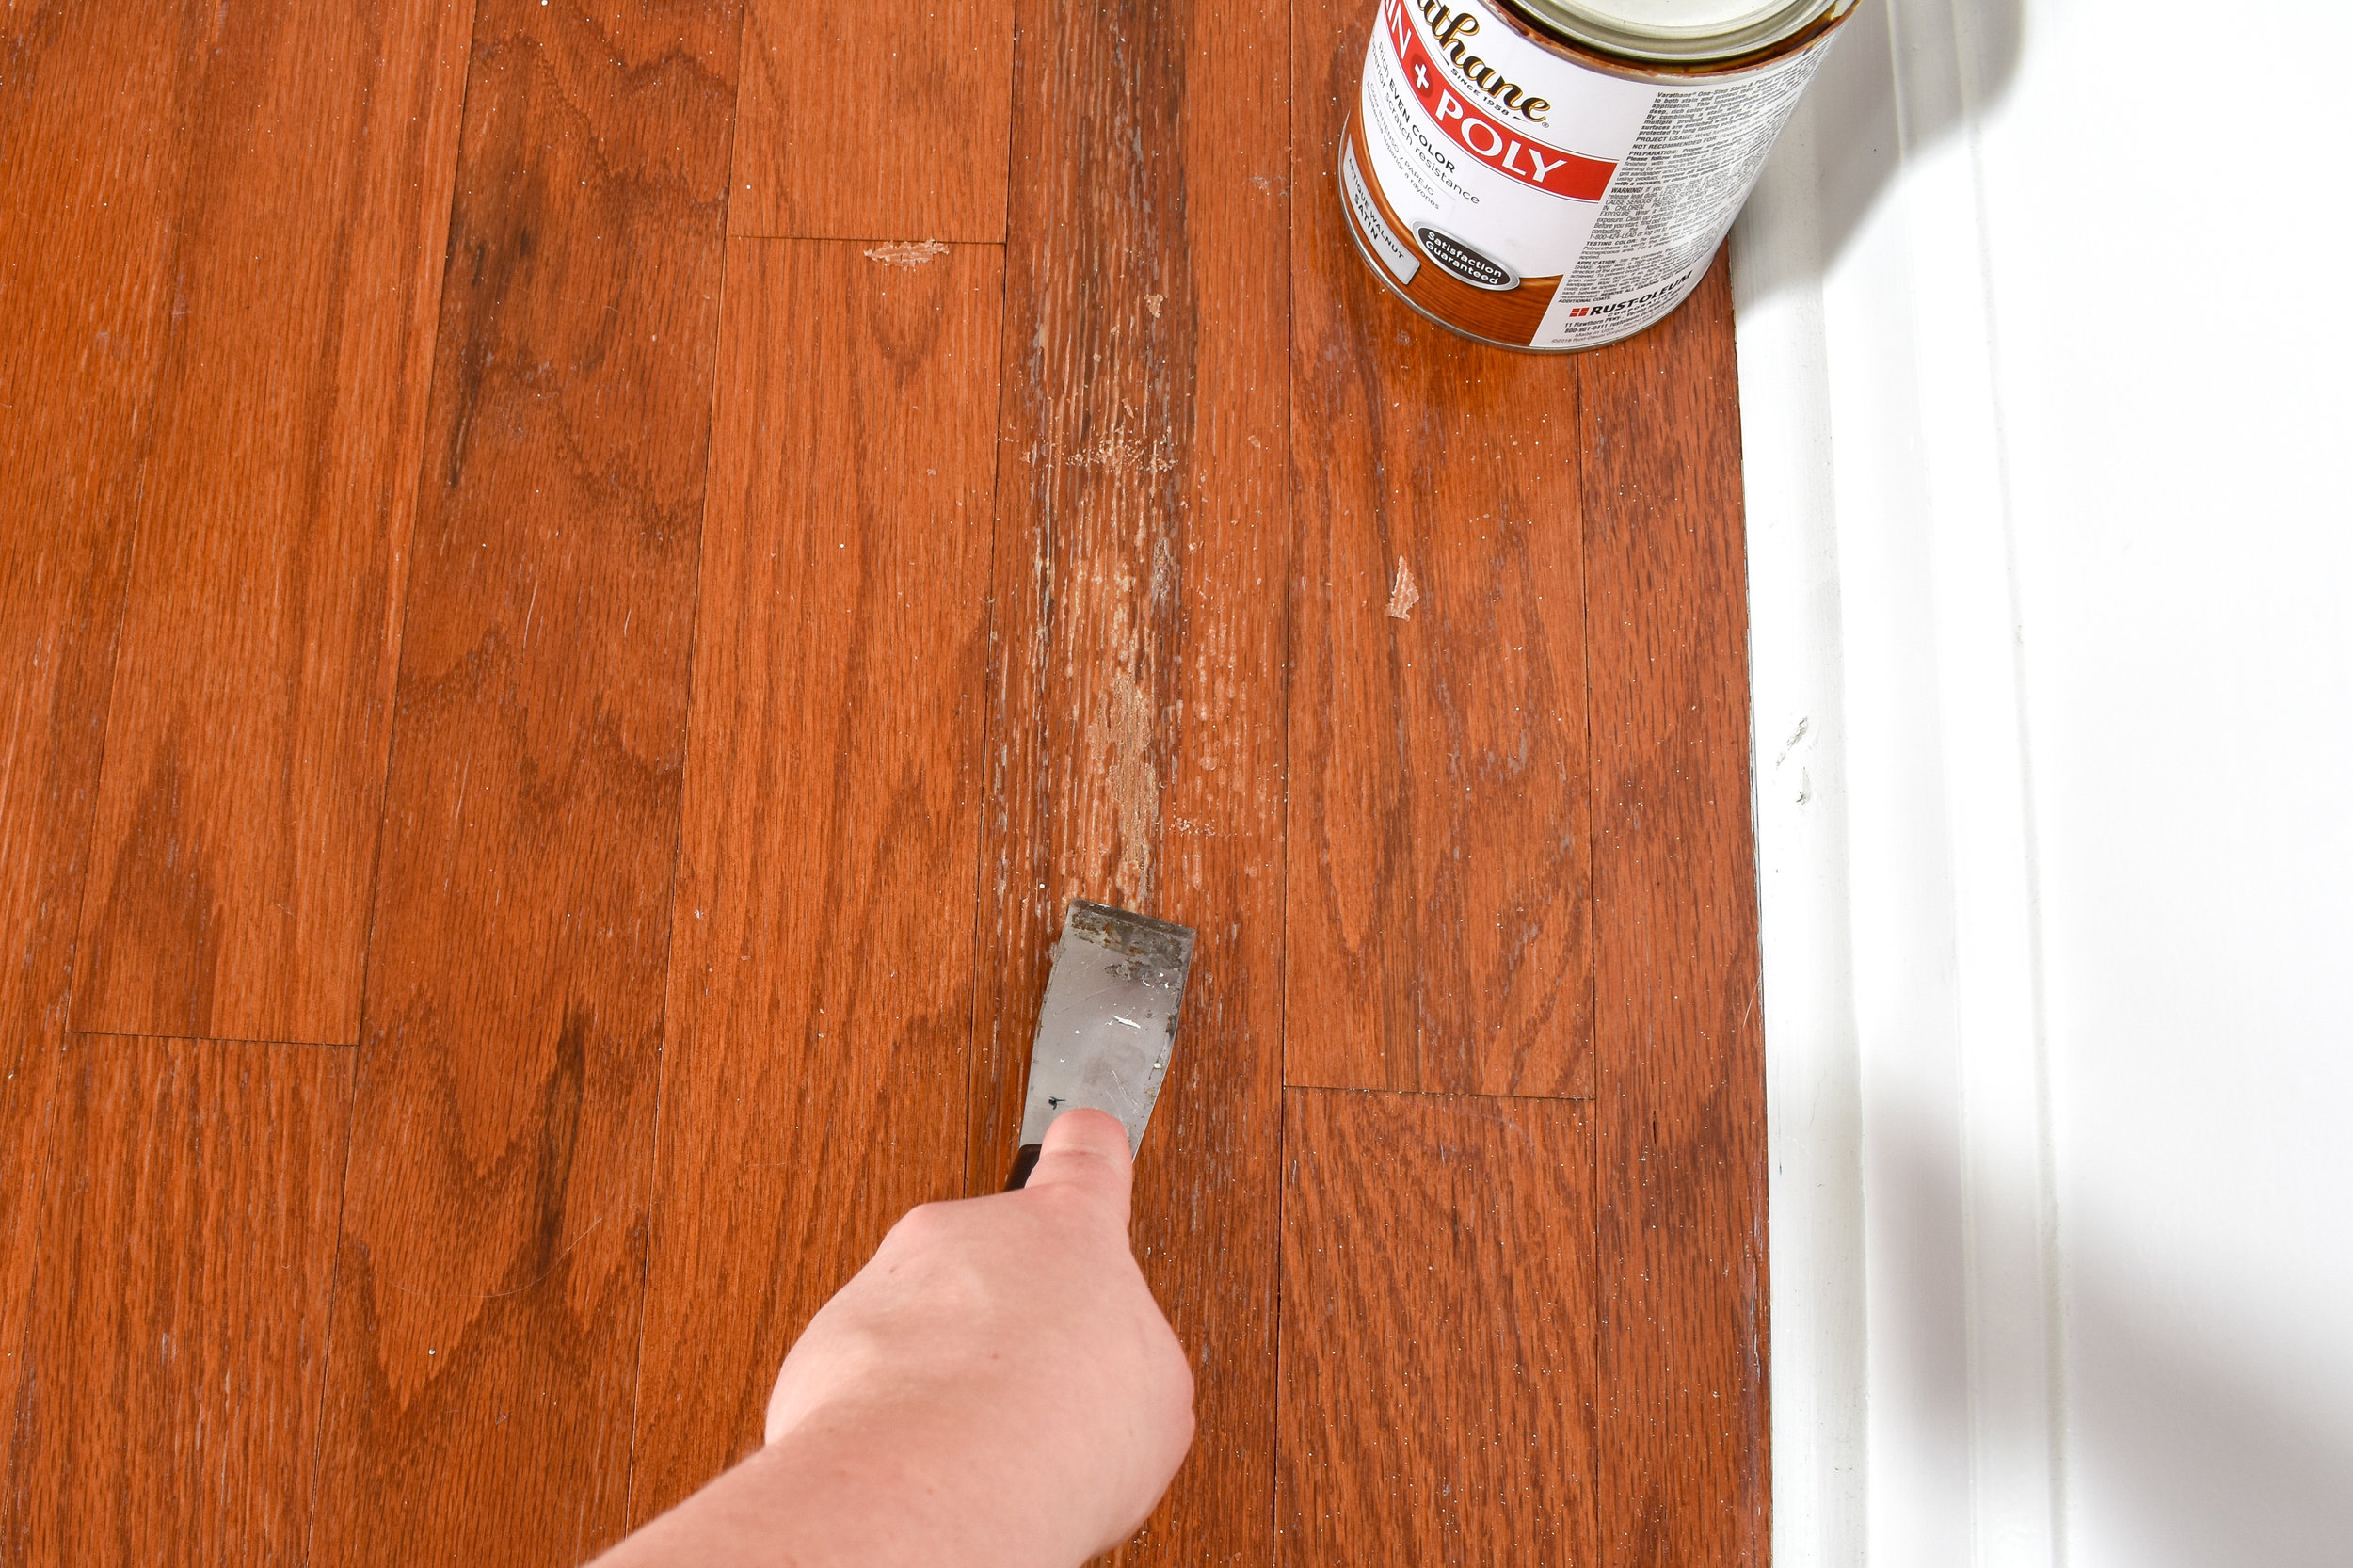 How To Make Old Hardwood Floors Shine, Protect Hardwood Floors From Water